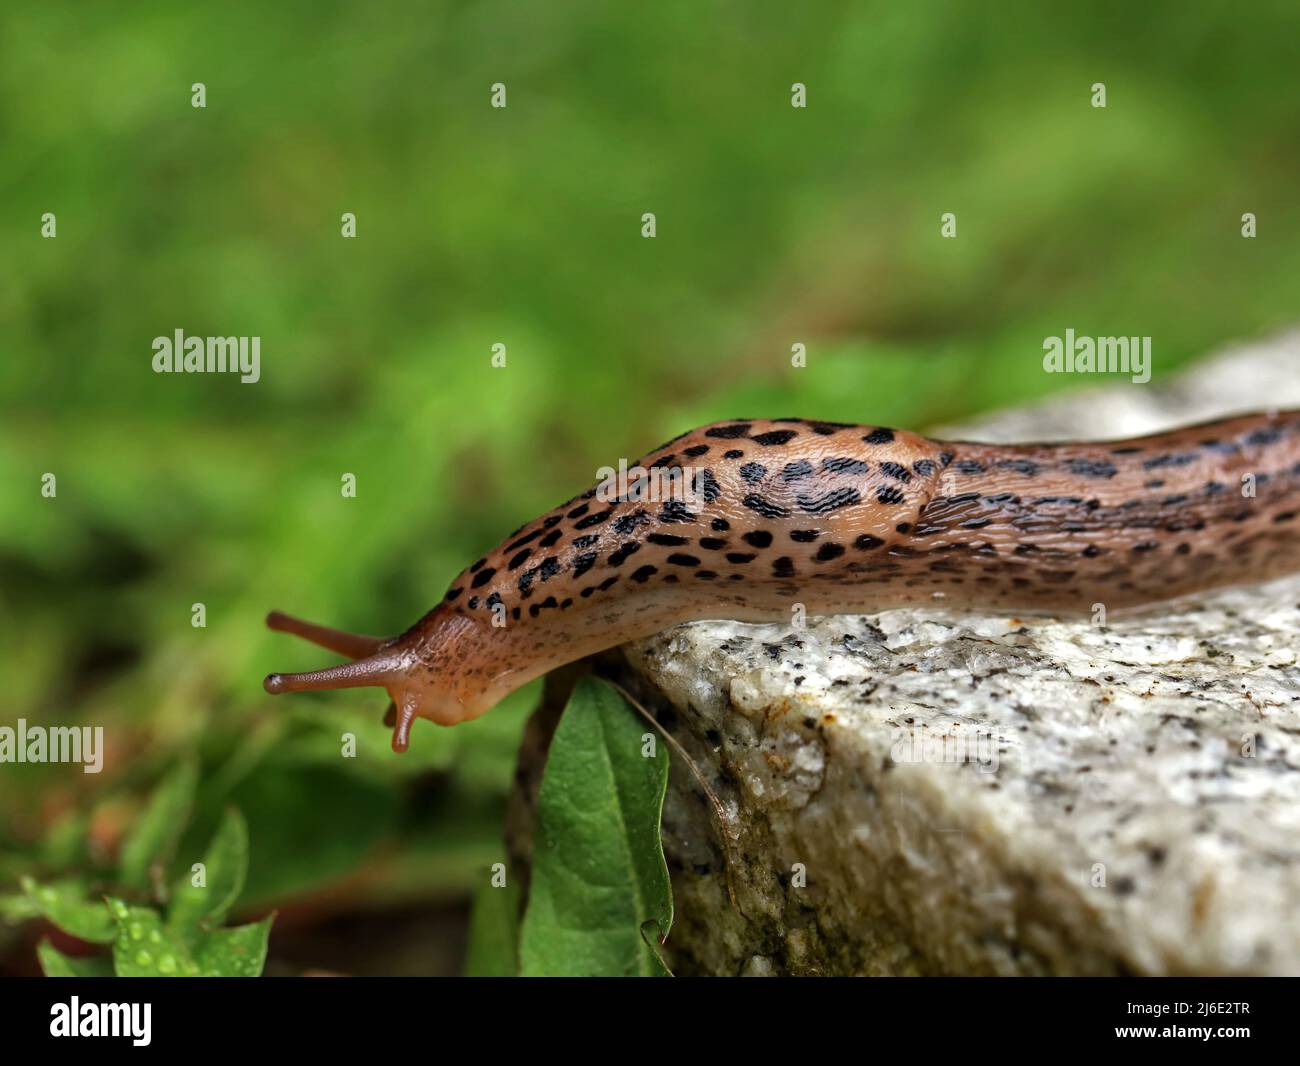 Leopard Slug or great greay slug, Limax maximus, crawling on granite stone in the garden on a rainy day Stock Photo